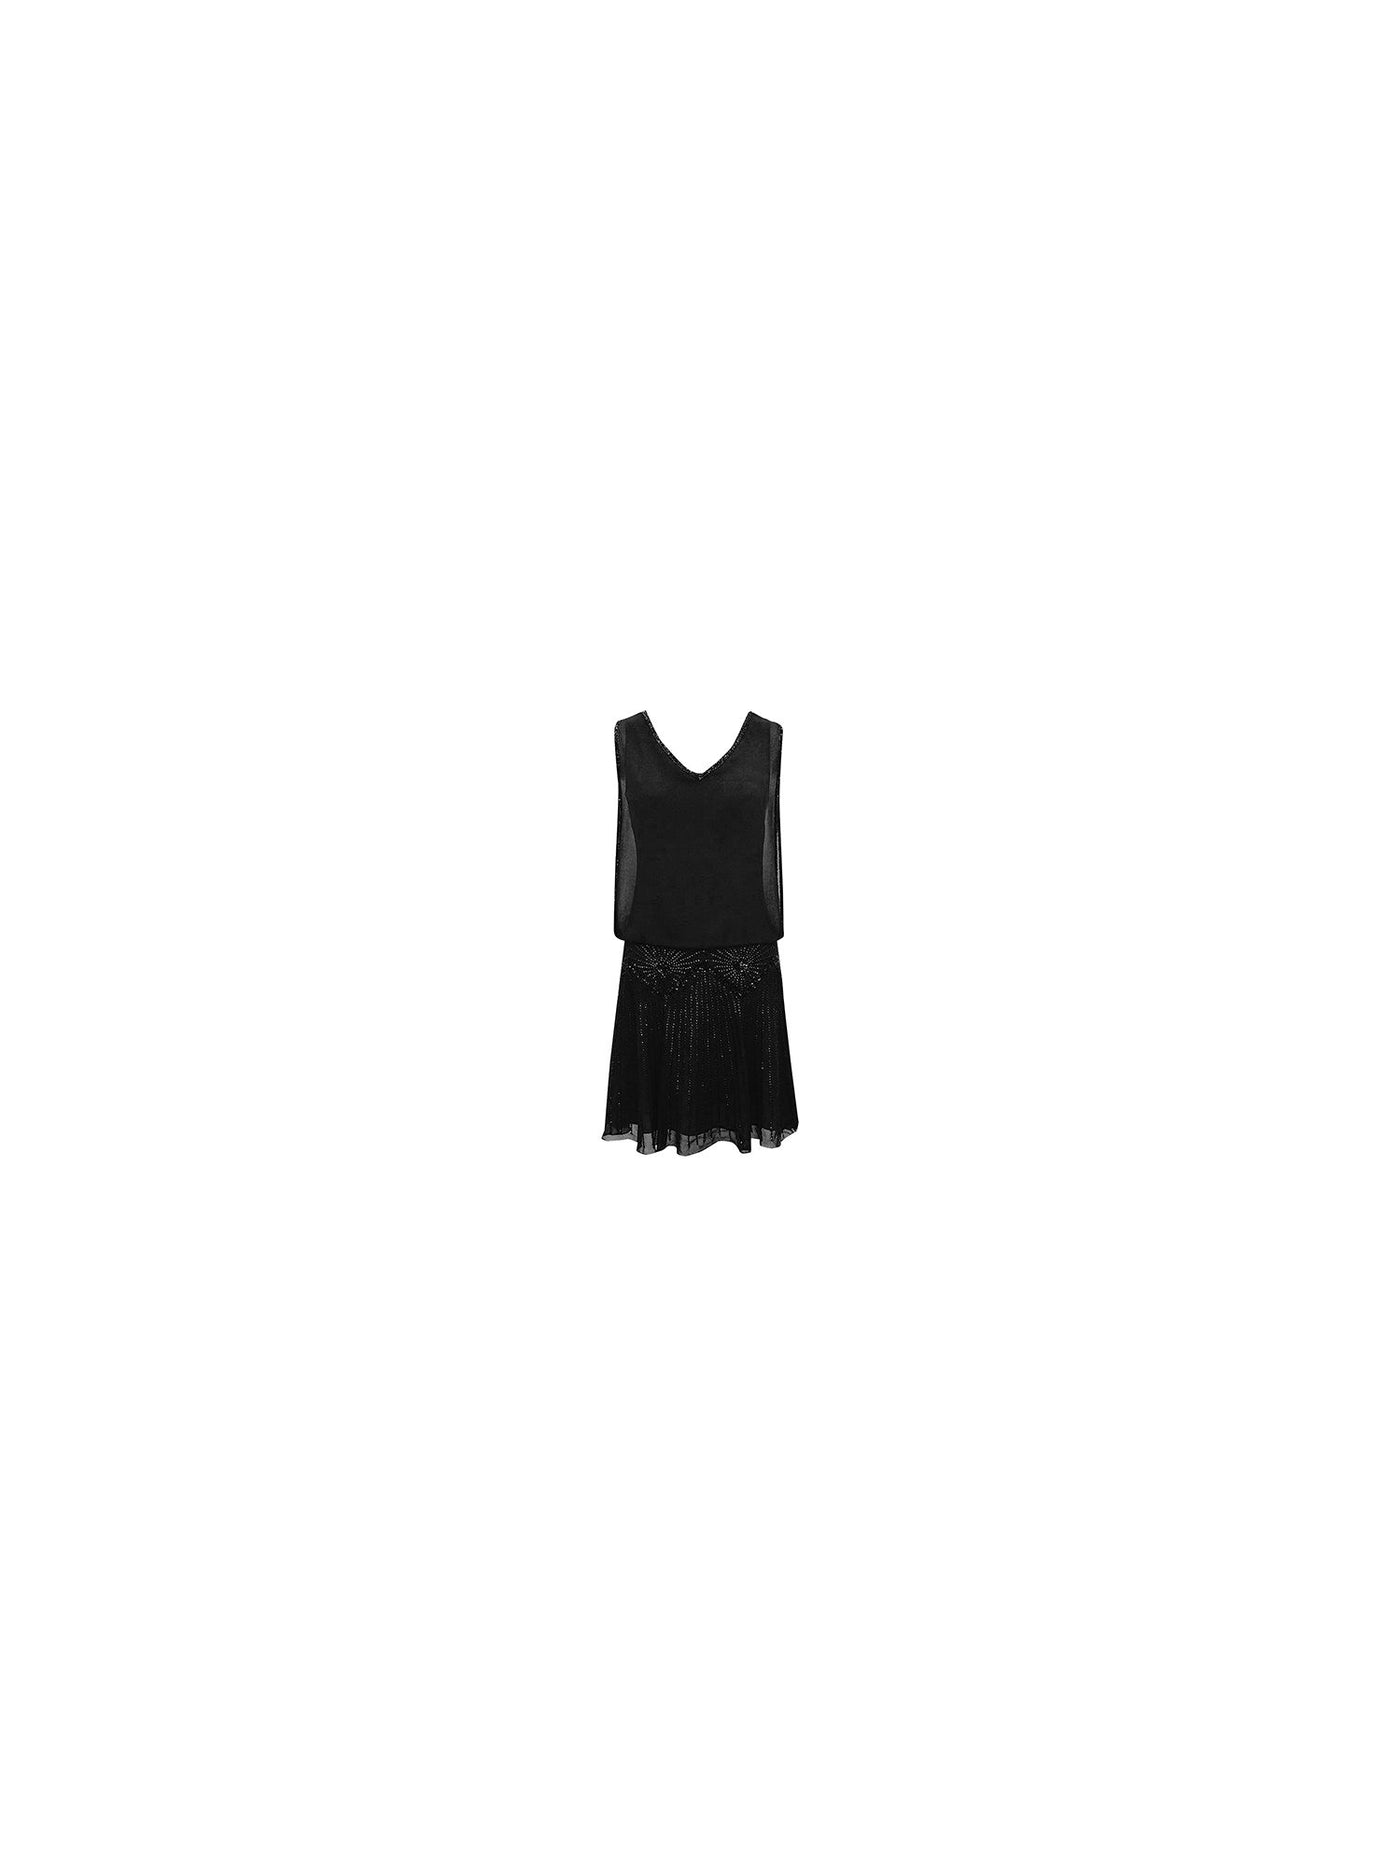 JKARA Womens Black Beaded Sequined Sleeveless V Neck Knee Length Cocktail Fit + Flare Dress 10